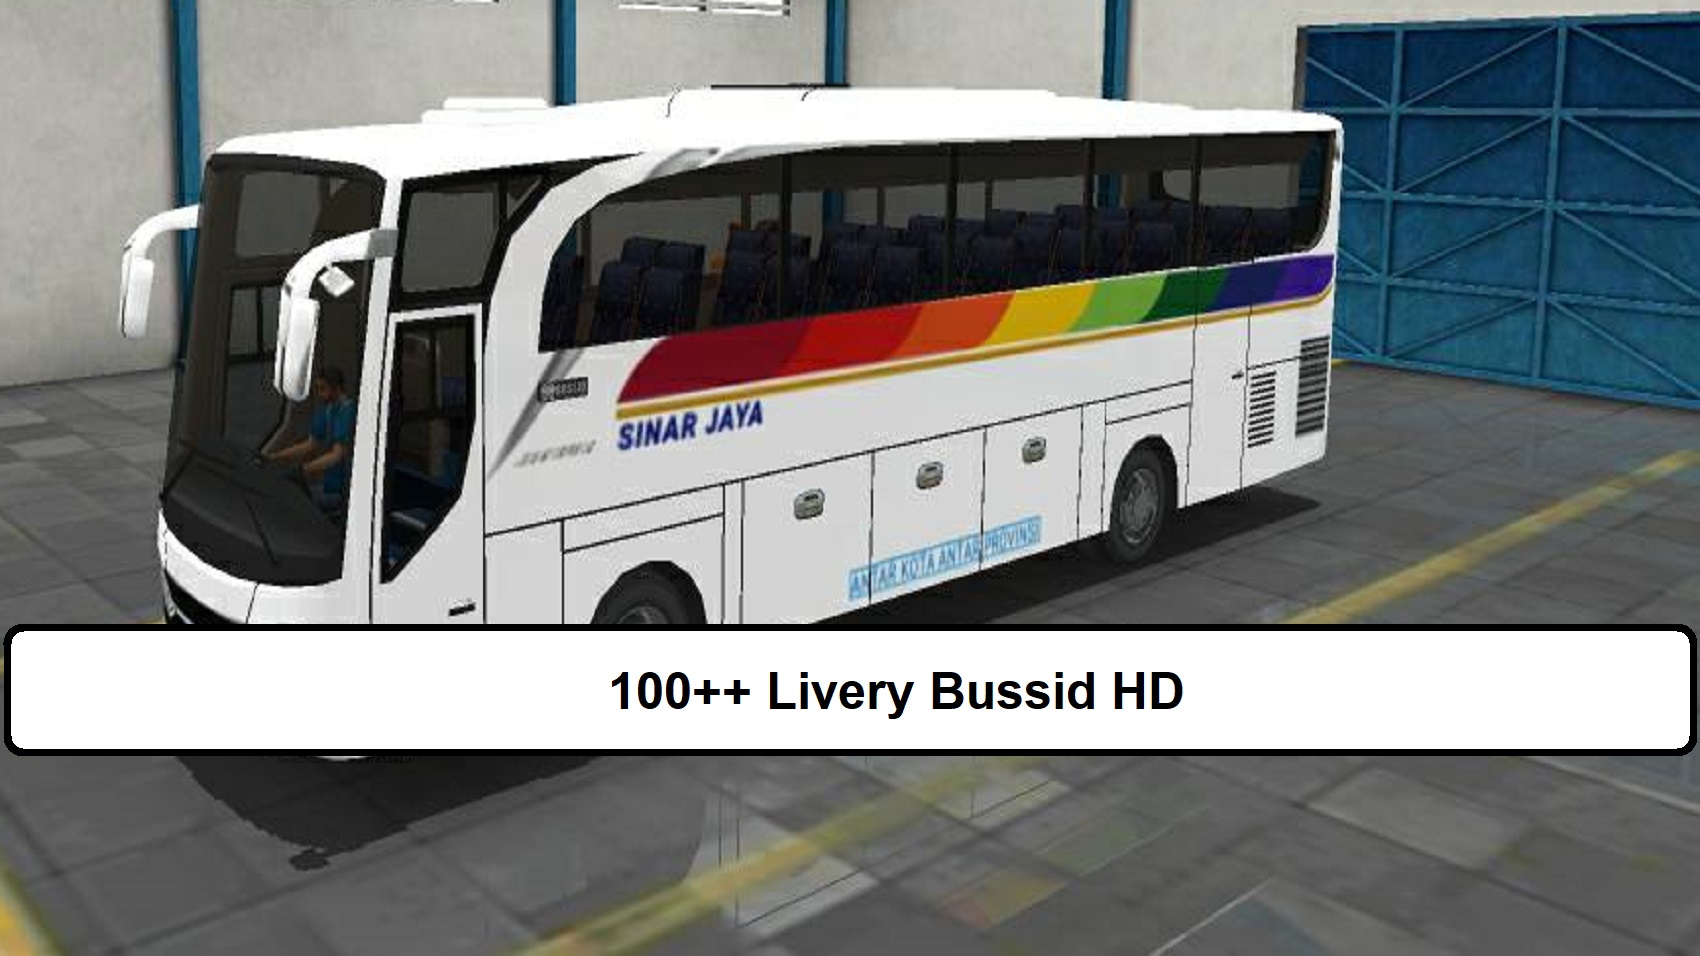 100++ Livery Bussid HD